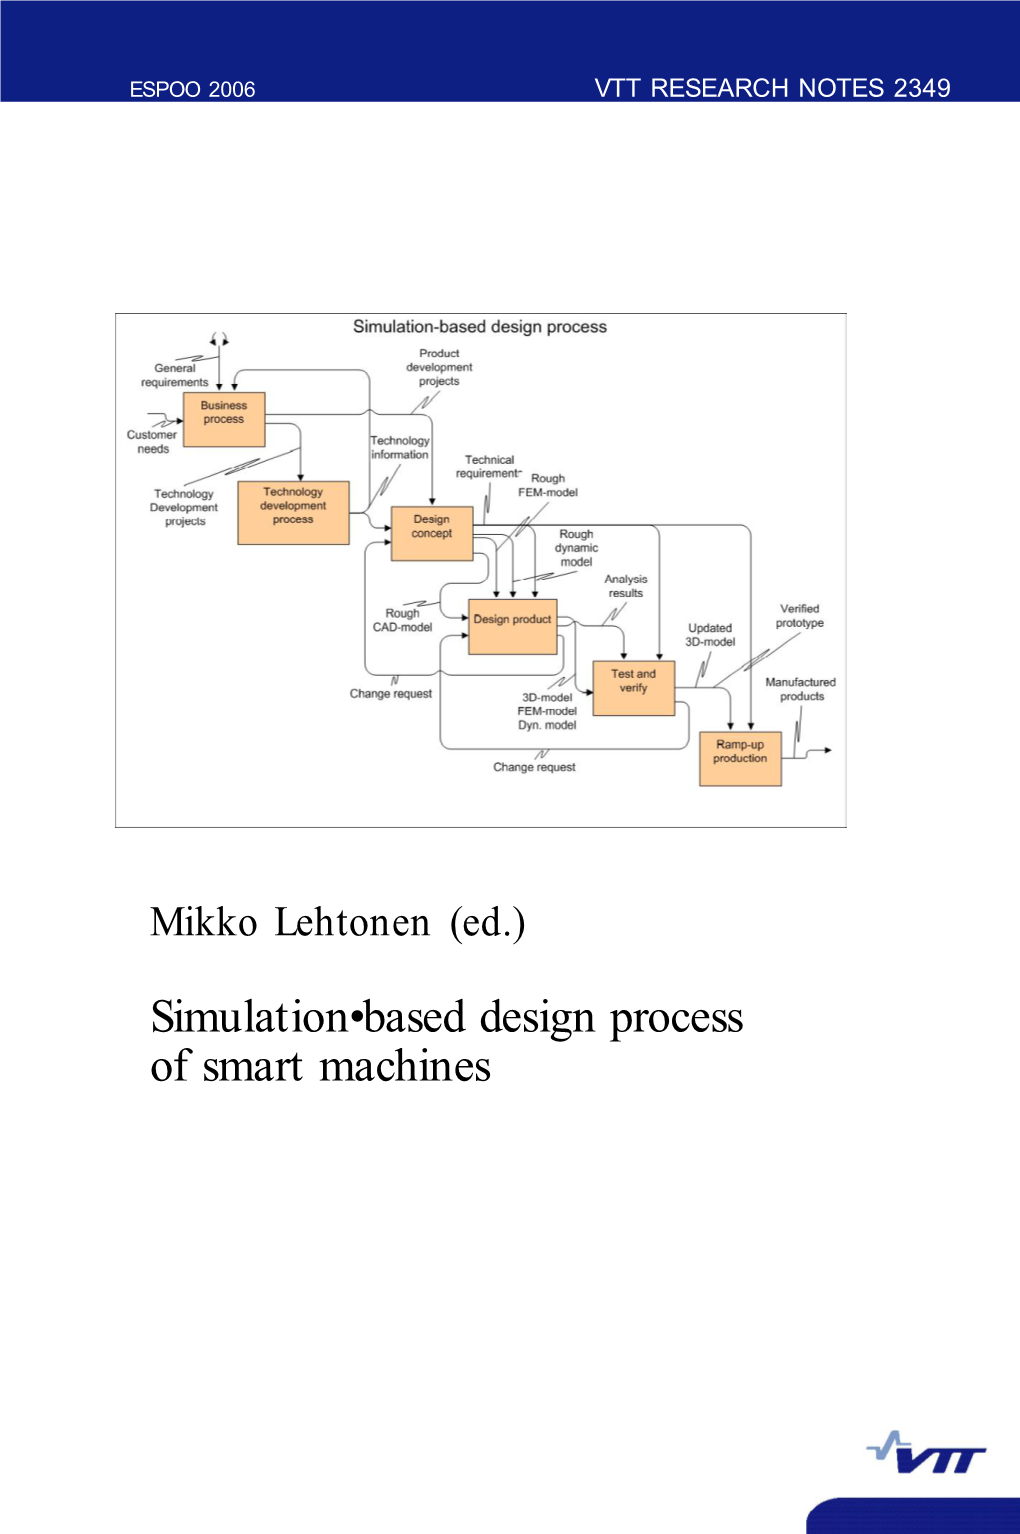 Simulation-Based Design Process of Smart Machines